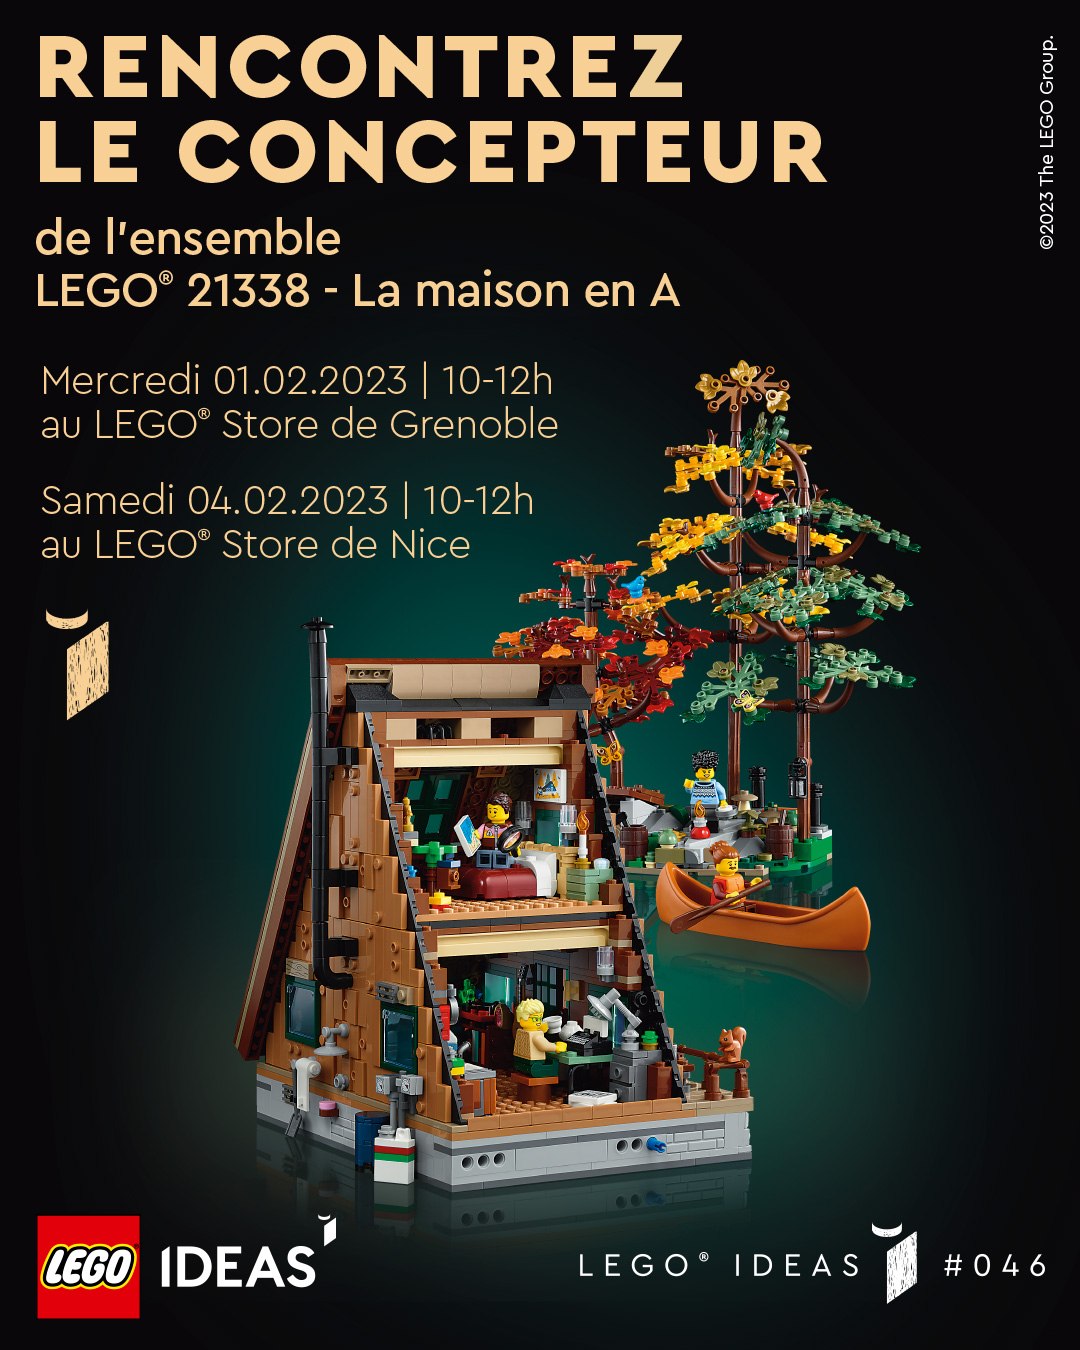 LEGO Ideas 21338 A-Frame Cabin: স্টোর অফ গ্রেনোবল অ্যান্ড নাইস-এ ফ্যান ডিজাইনারের সাথে দেখা করুন